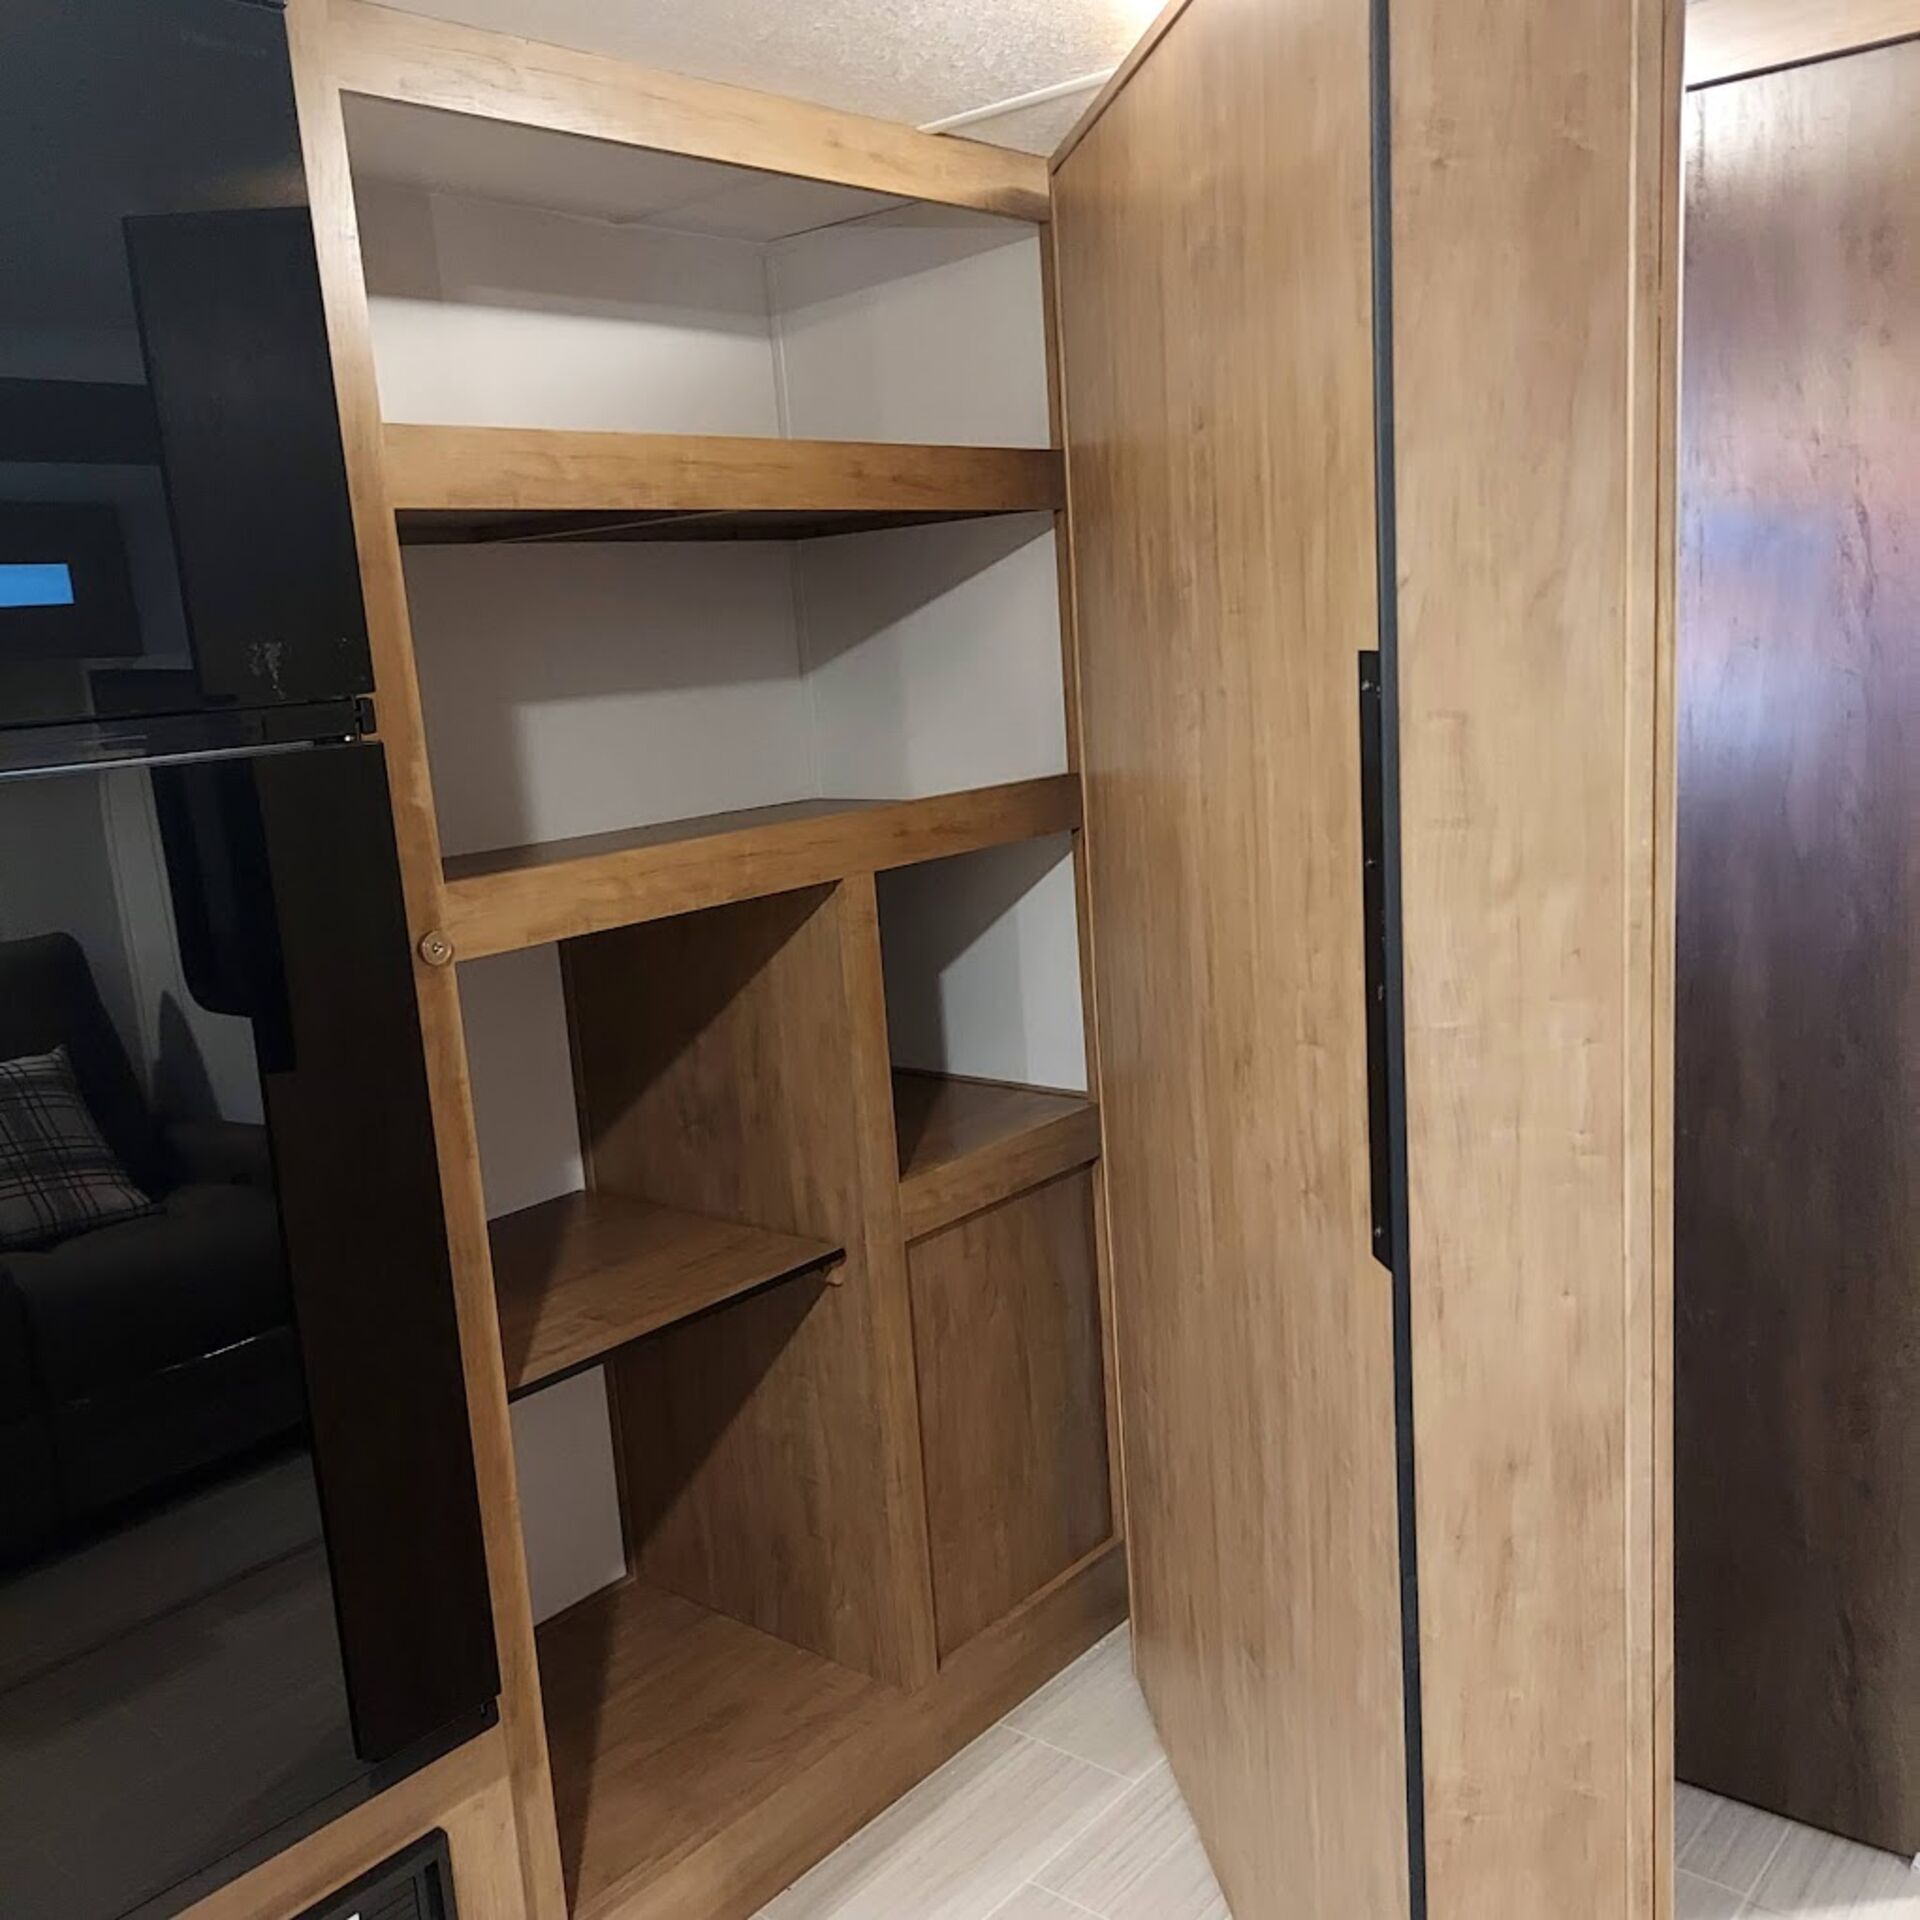 Additional cabinet storage behind panel 